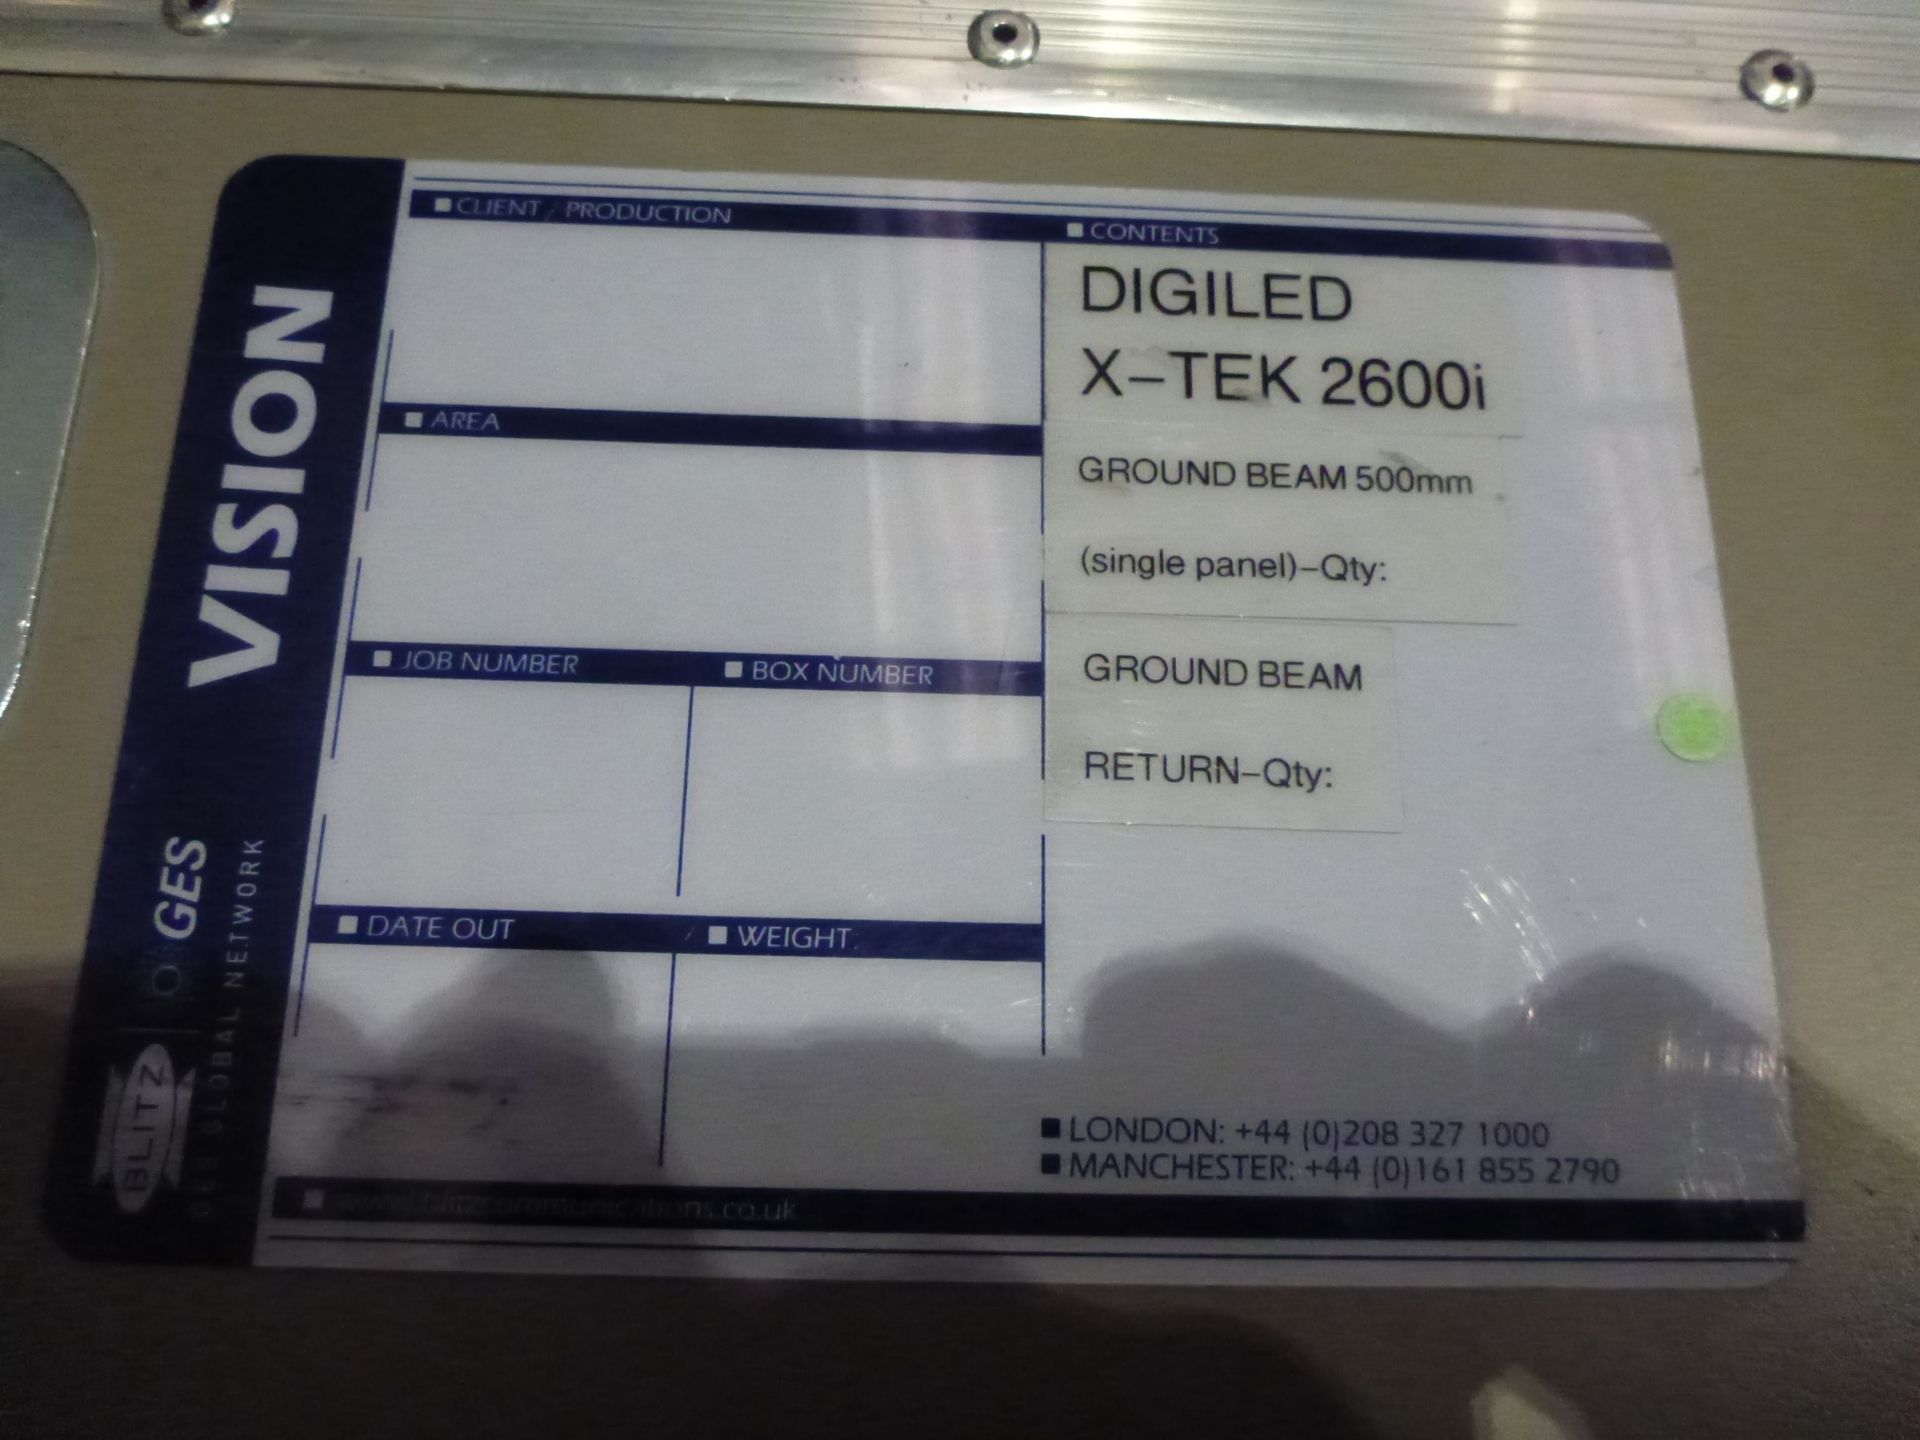 DigiLED X-Tek 2600i Ground Beam Support Kit, 500 mm single panel, Qty 6 in flight case - Image 3 of 4